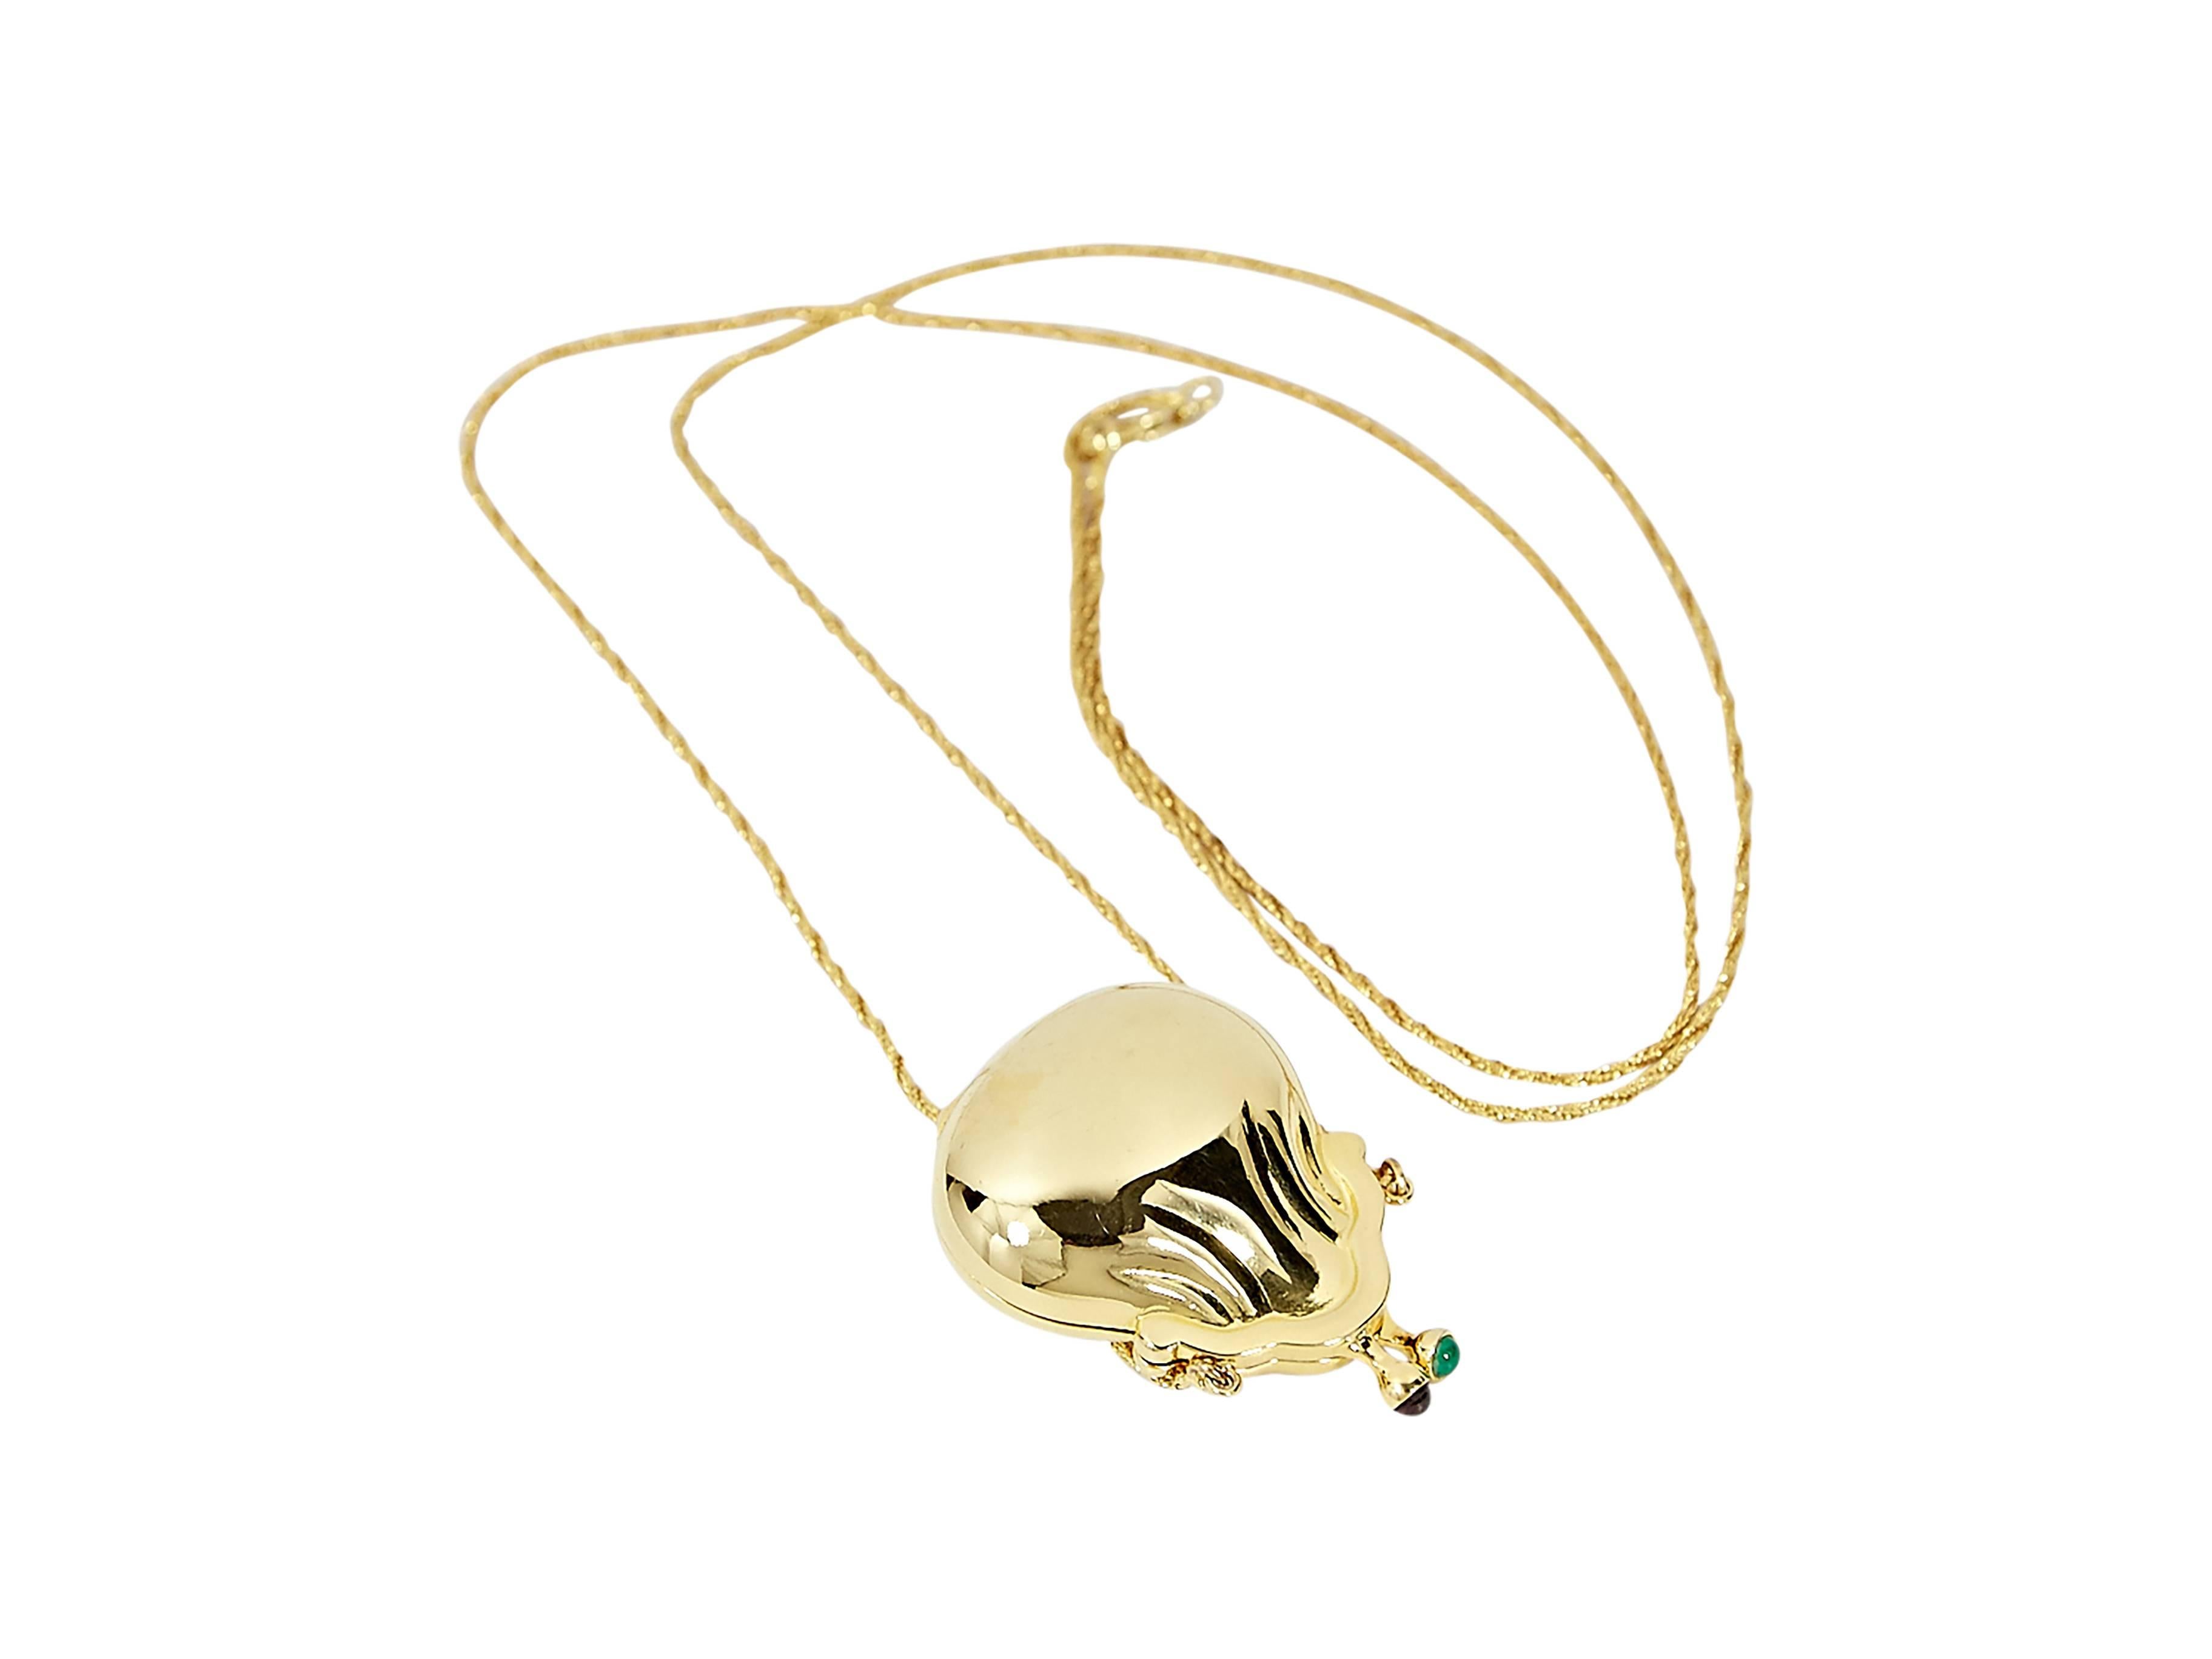 Goldtone purse charm necklace by Judith Leiber.  Twist-lock purse charm.  Clasp closure.